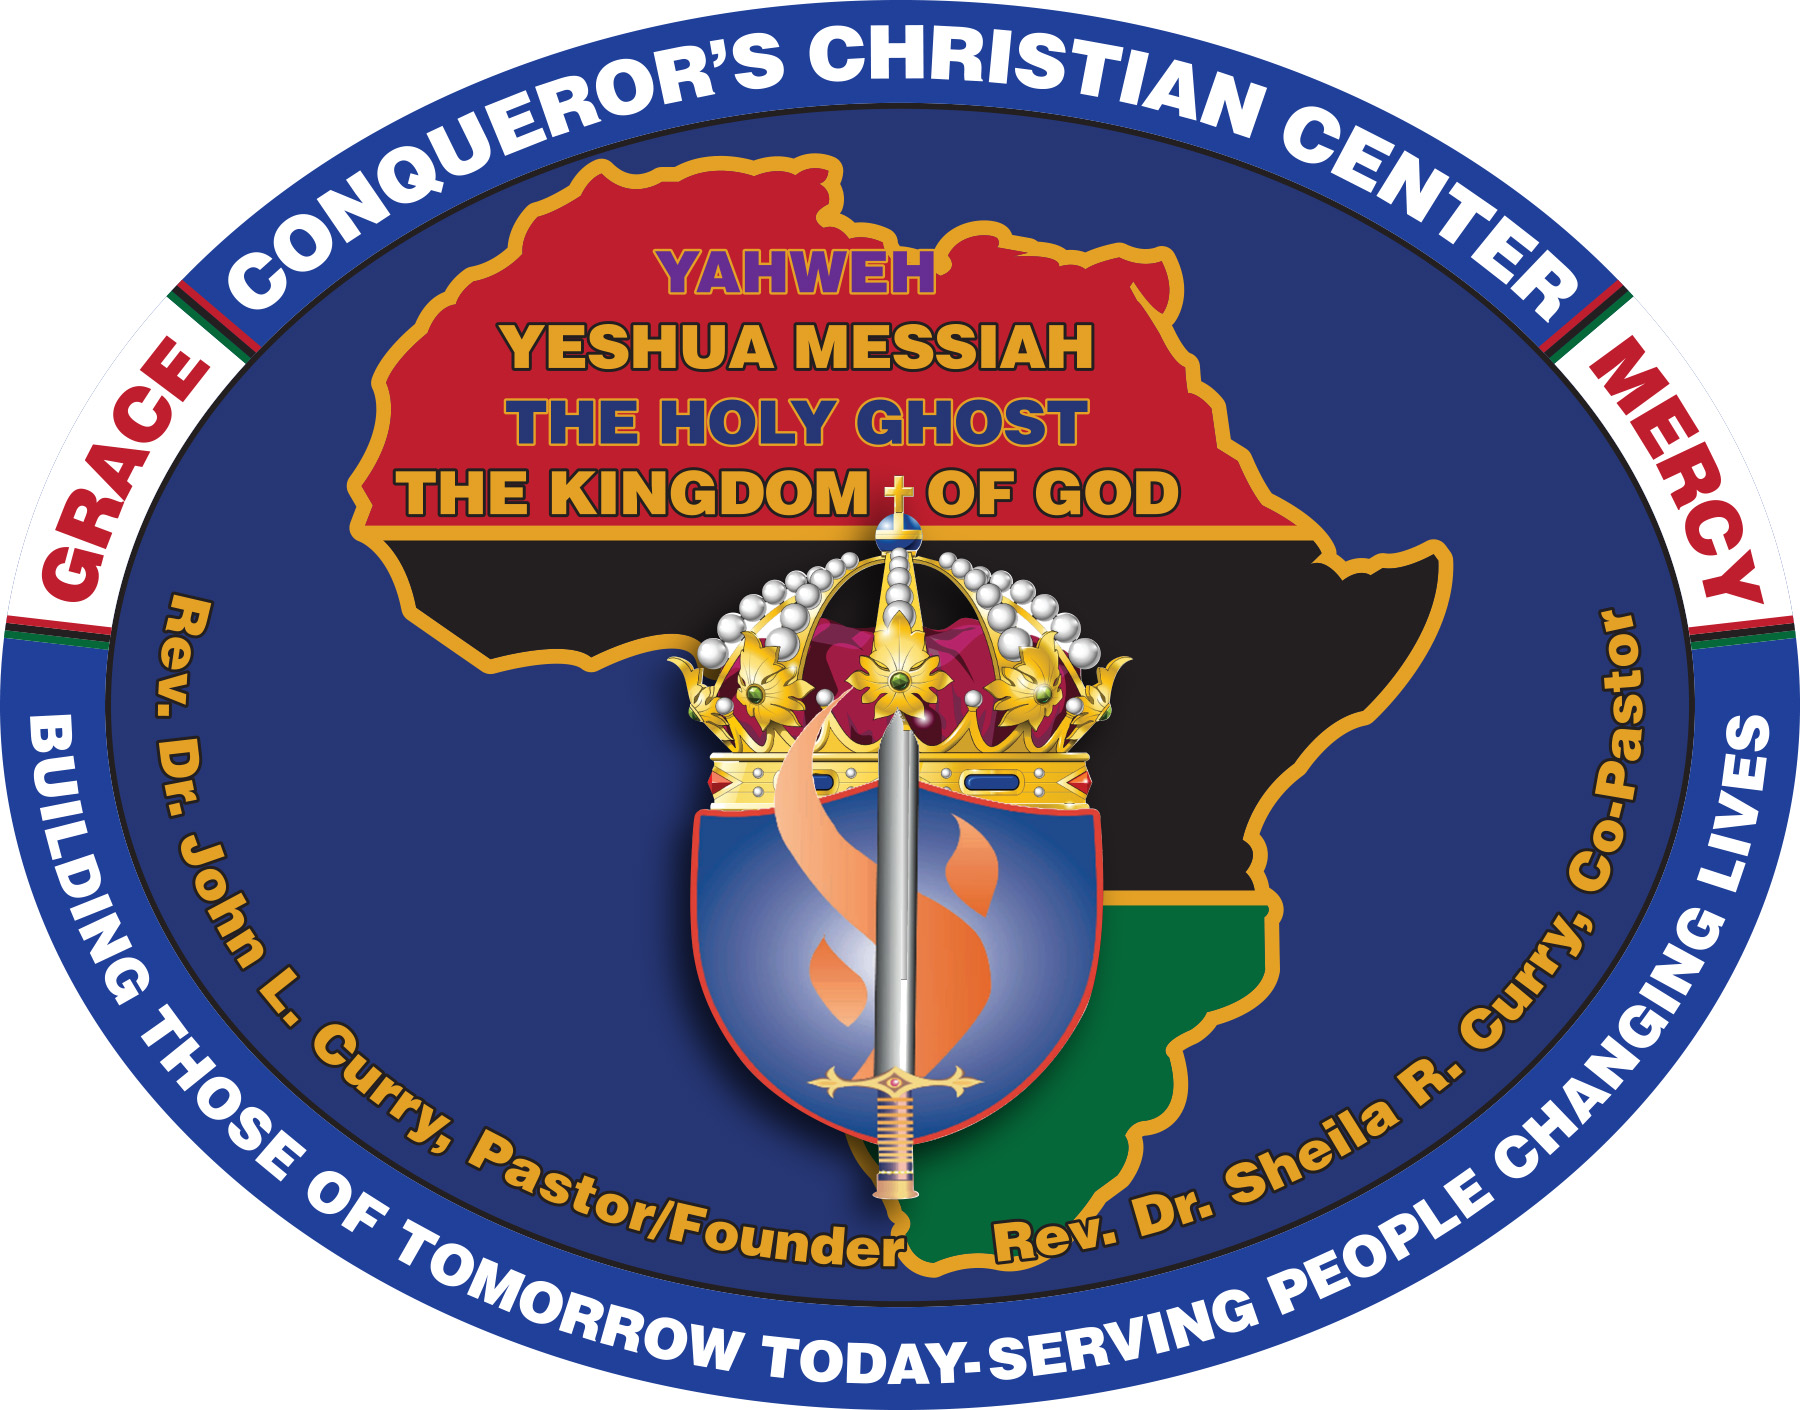 Conquerors-Christian-Center-2021